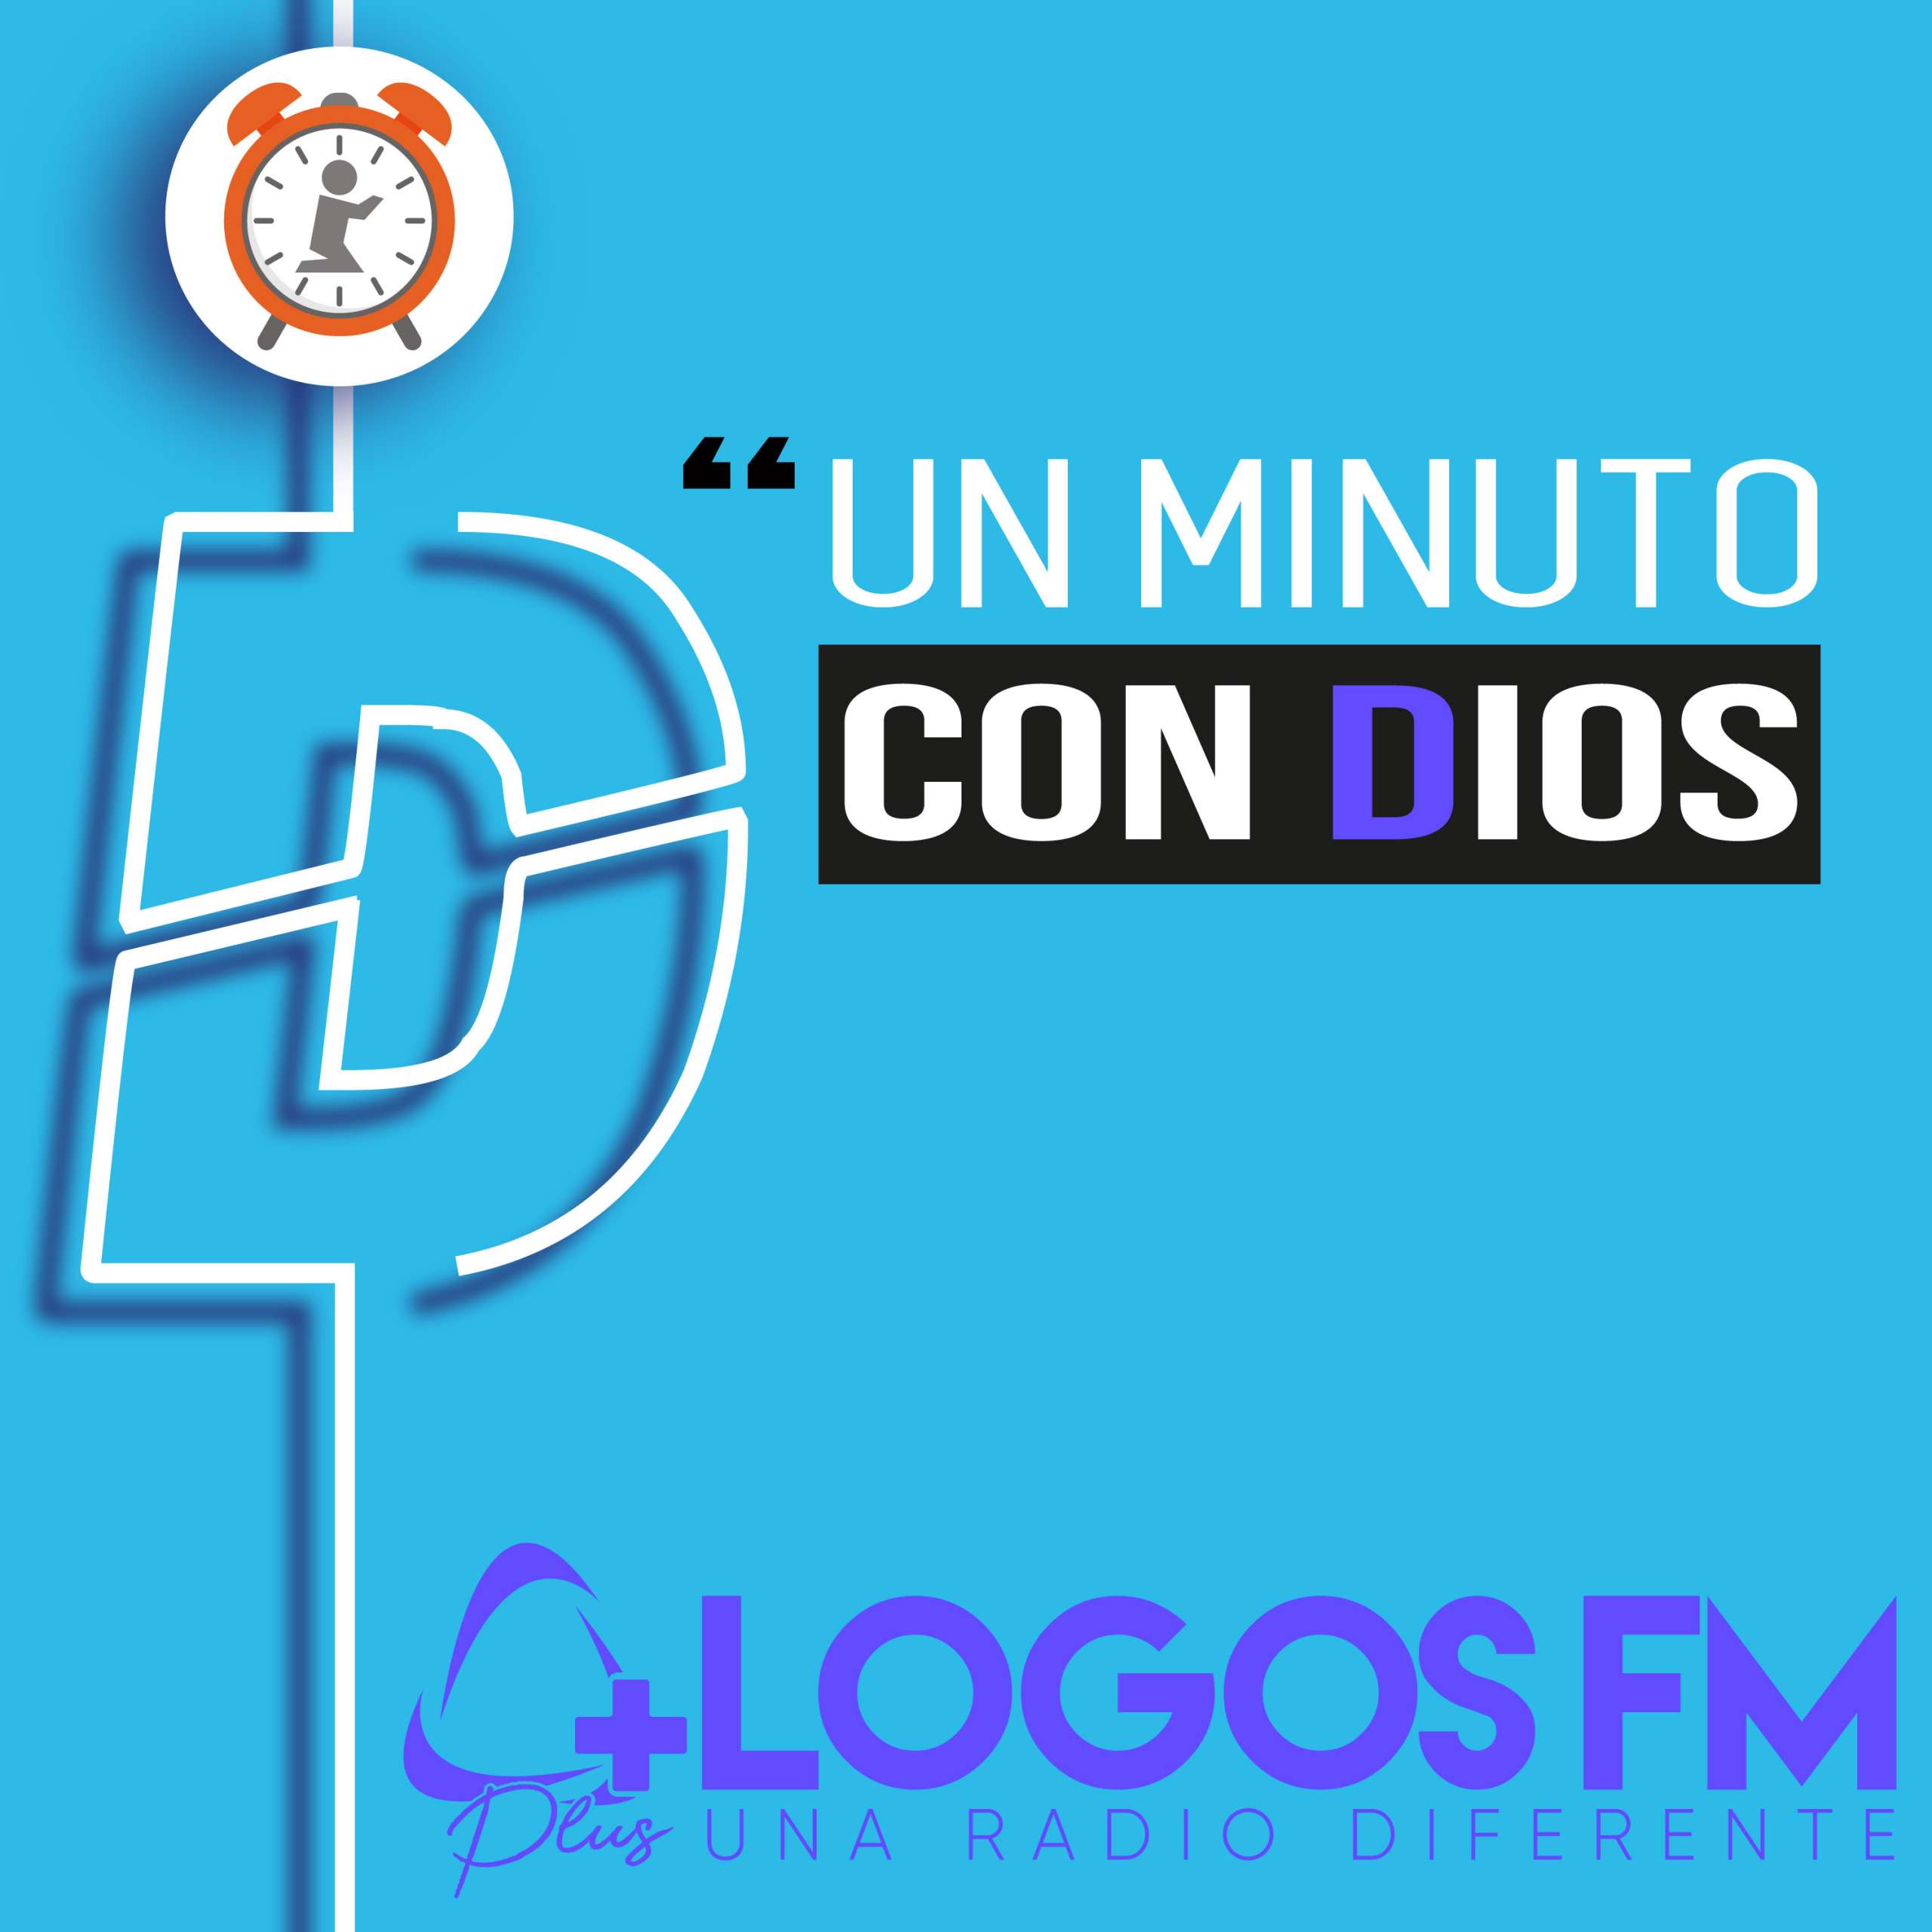 Un minuto con Dios - Episodio 450 - Loida Vargas